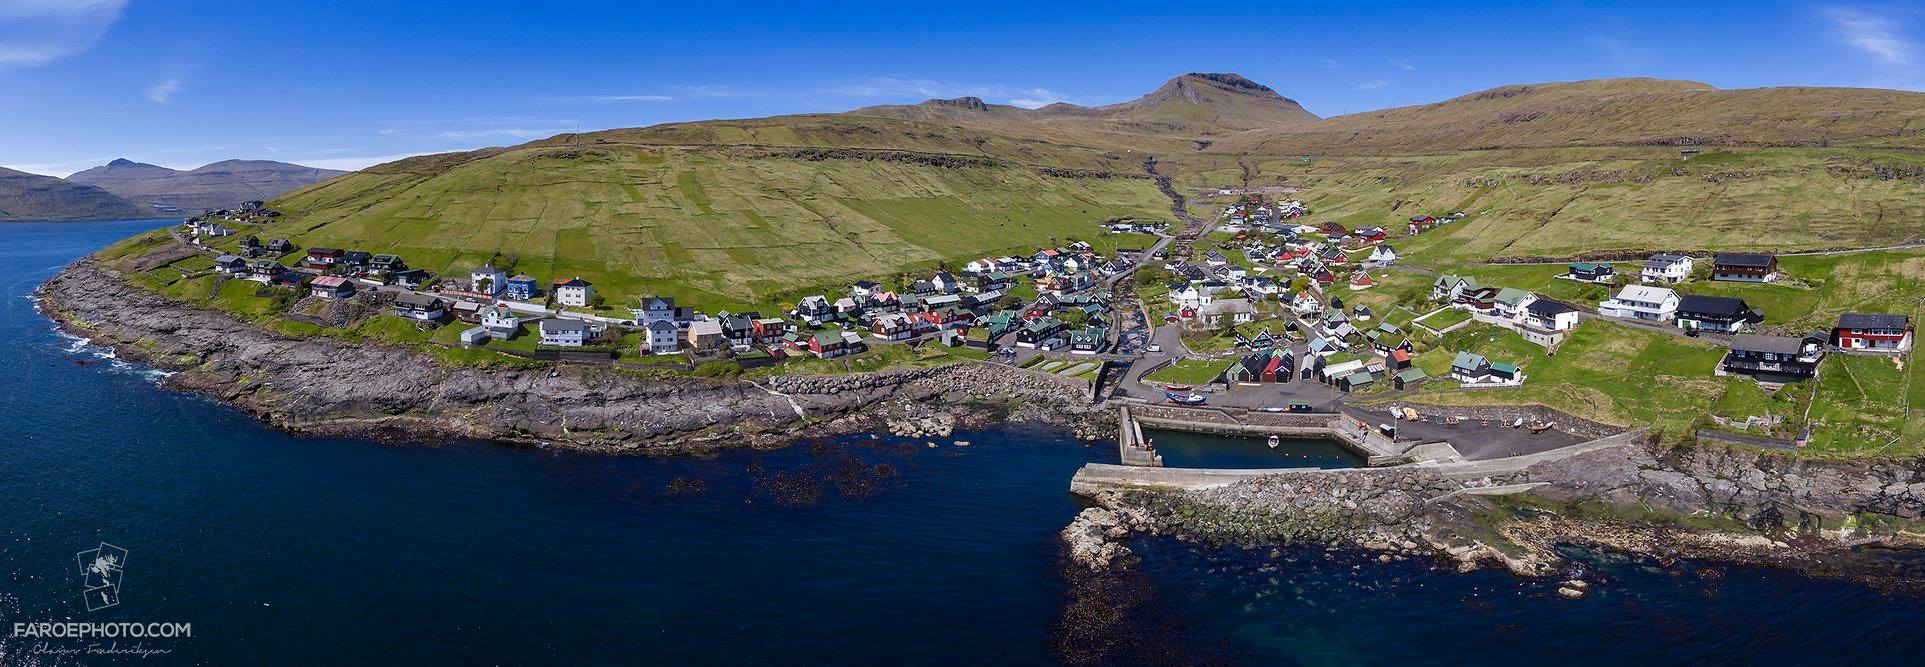 Kvívík - в деревня, расположенная на западном побережье стреймой..jpg